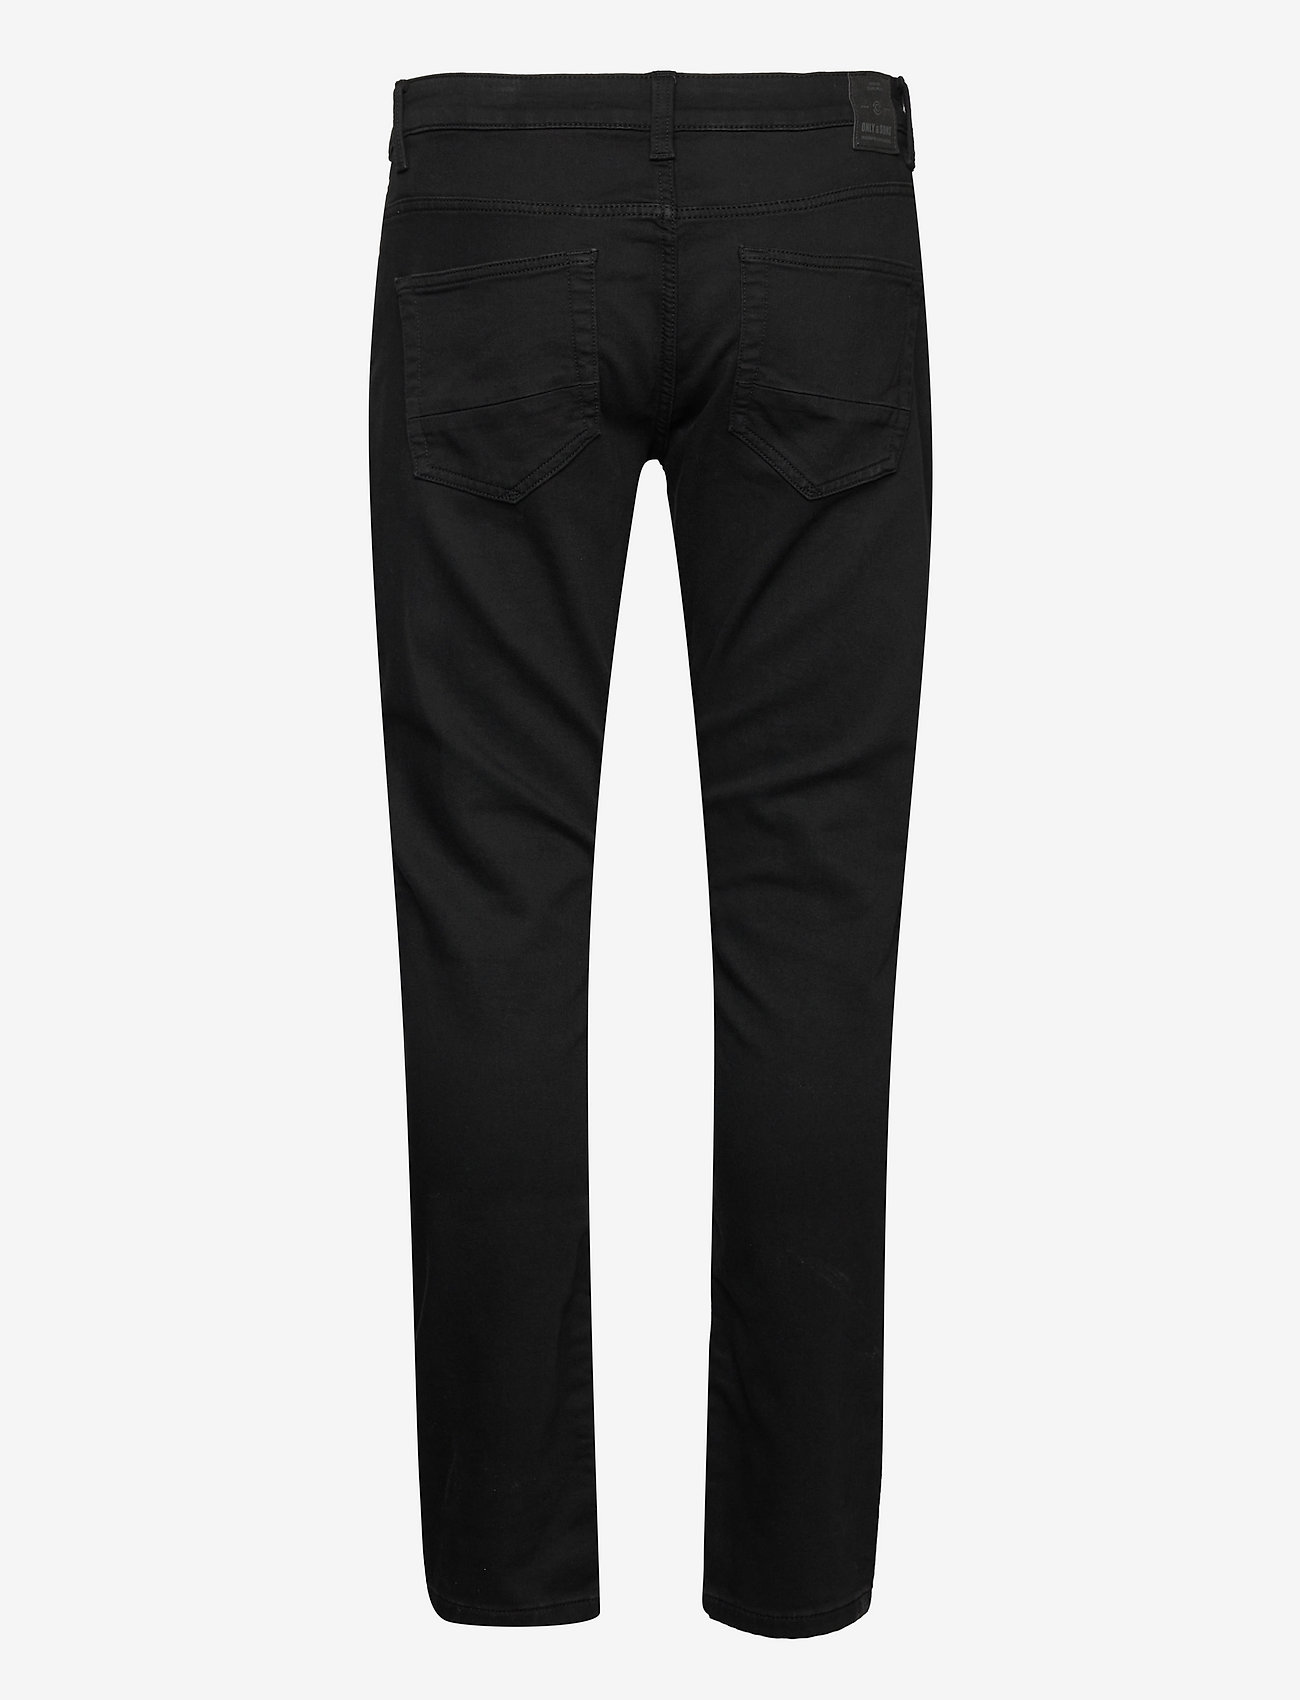 ONLY & SONS Onsloom Life Slim Black Jog Pk 0975 - Slim jeans | Boozt.com